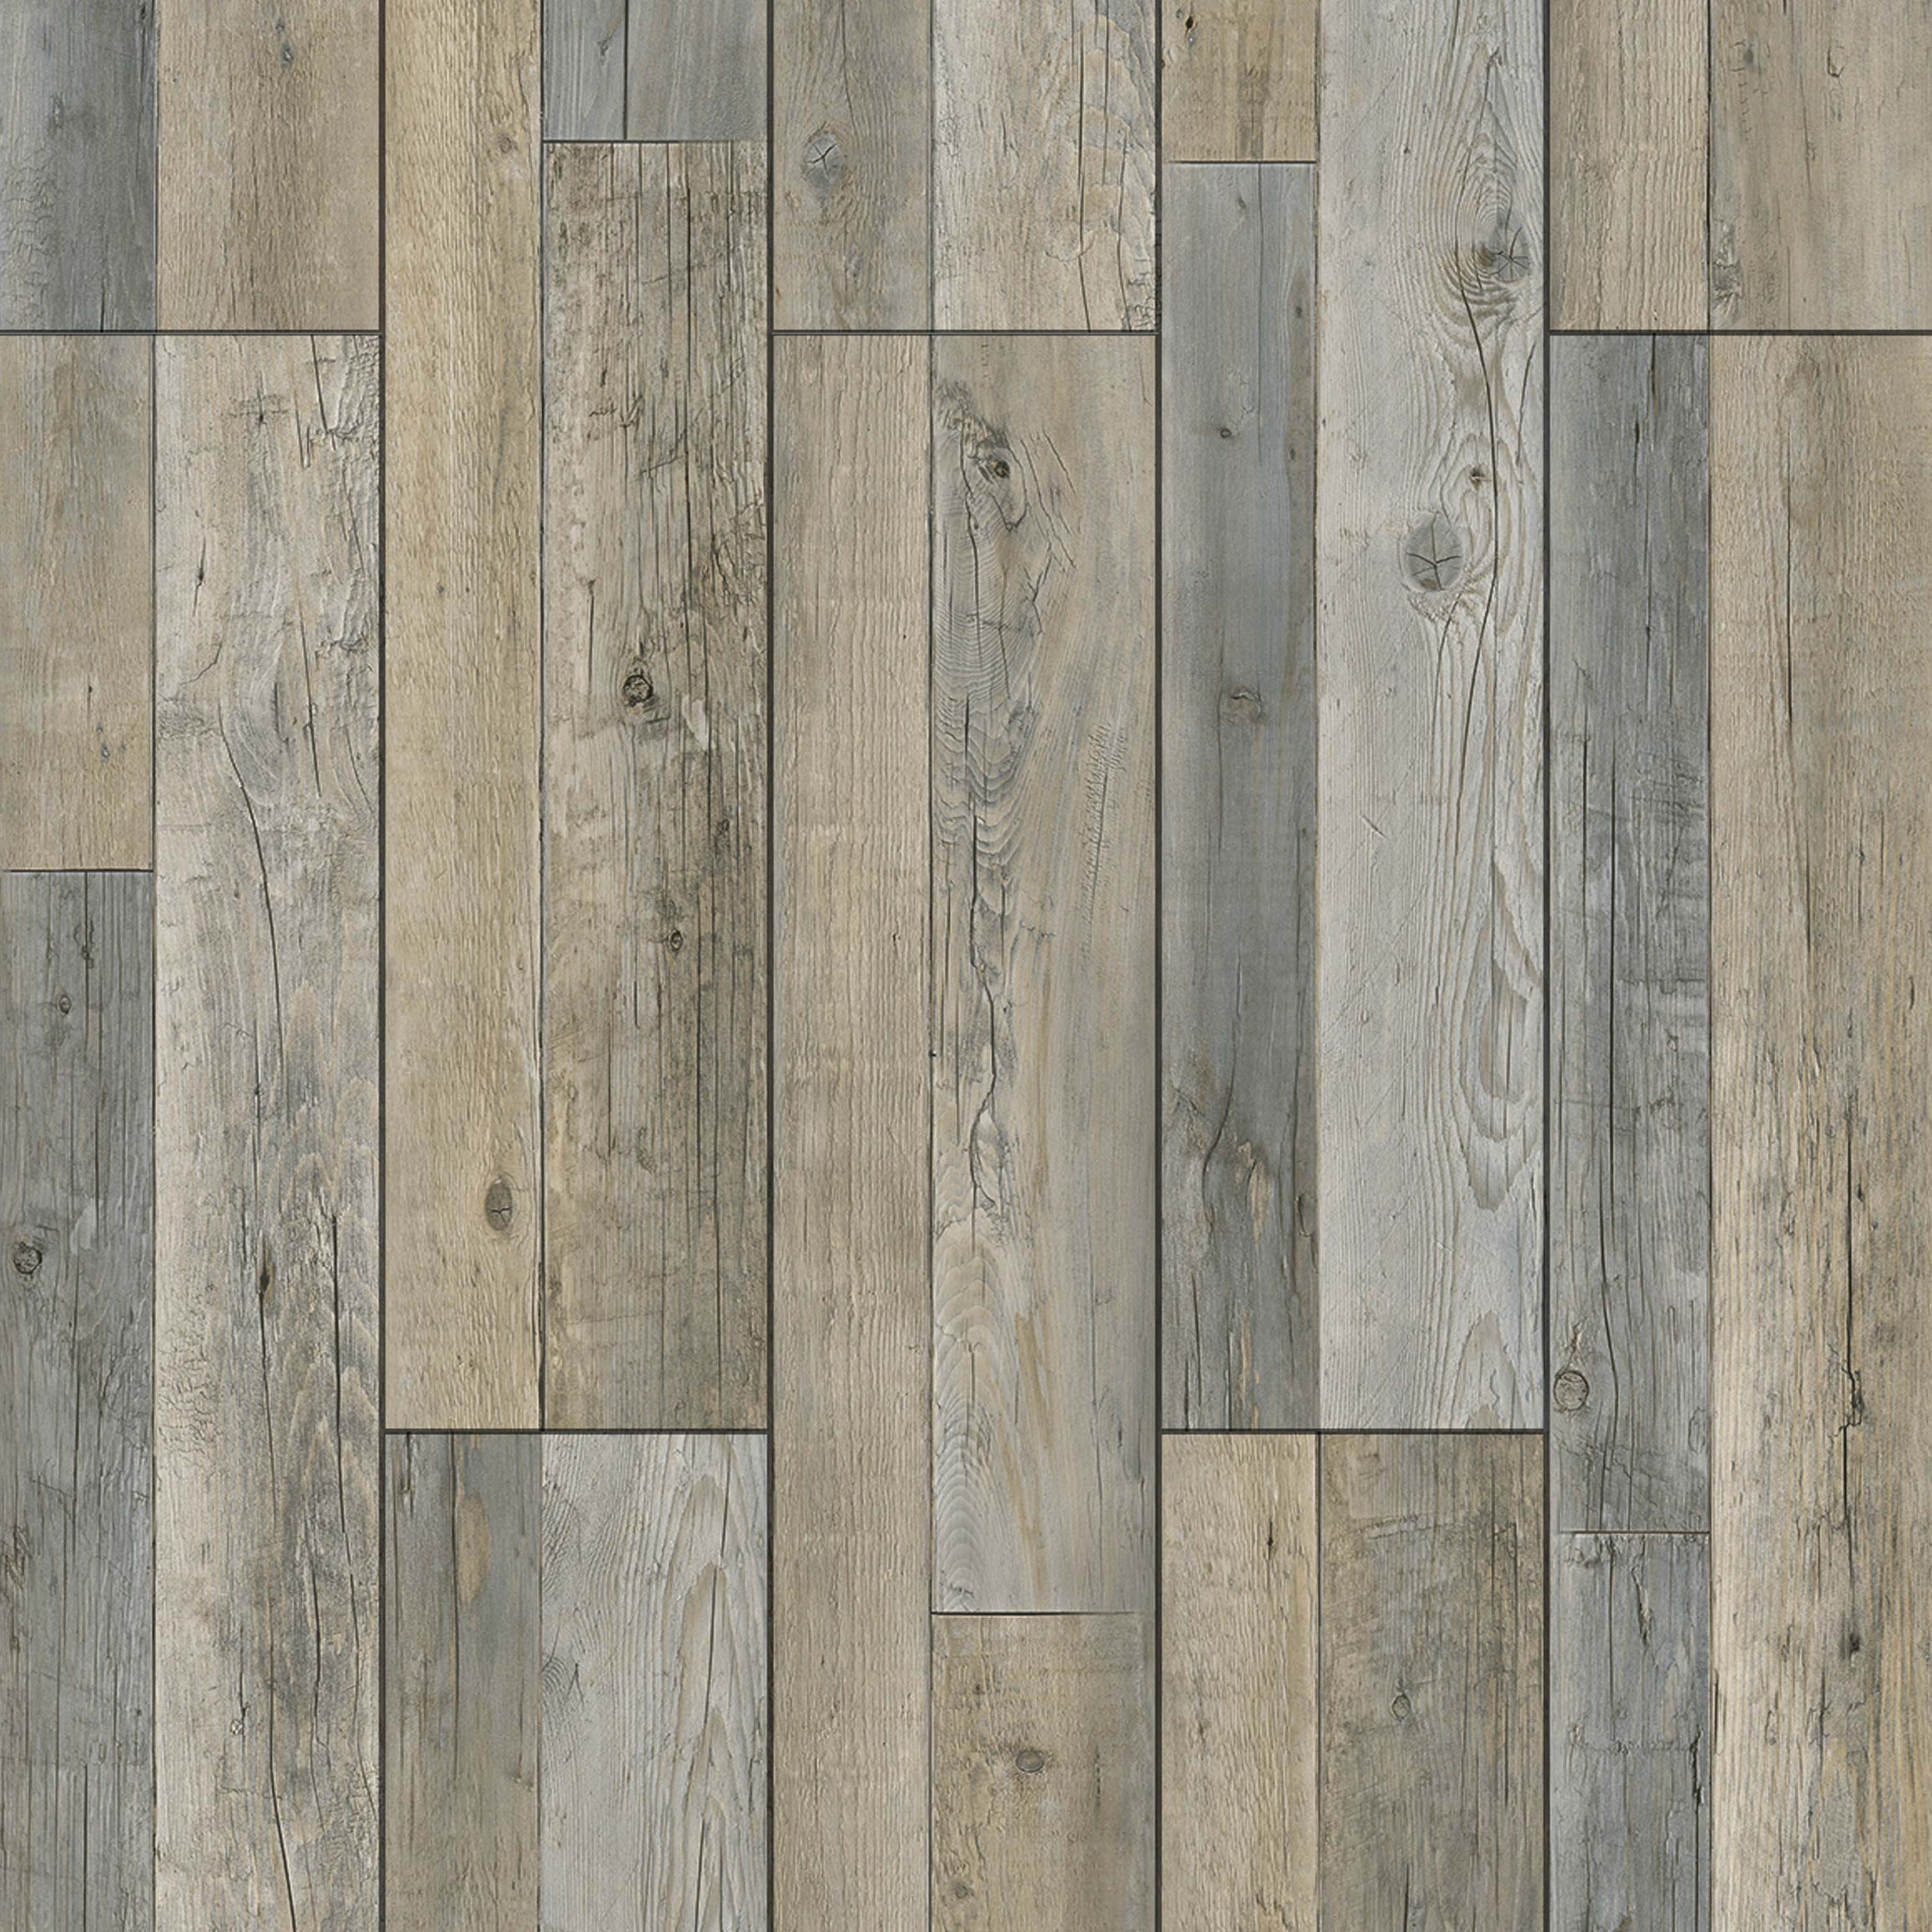 2020 New Style Timber Sports Flooring -
 Embossed Texture PVC Virgin Material Plastic Vinyl Tiles SPC Flooring – Kangton